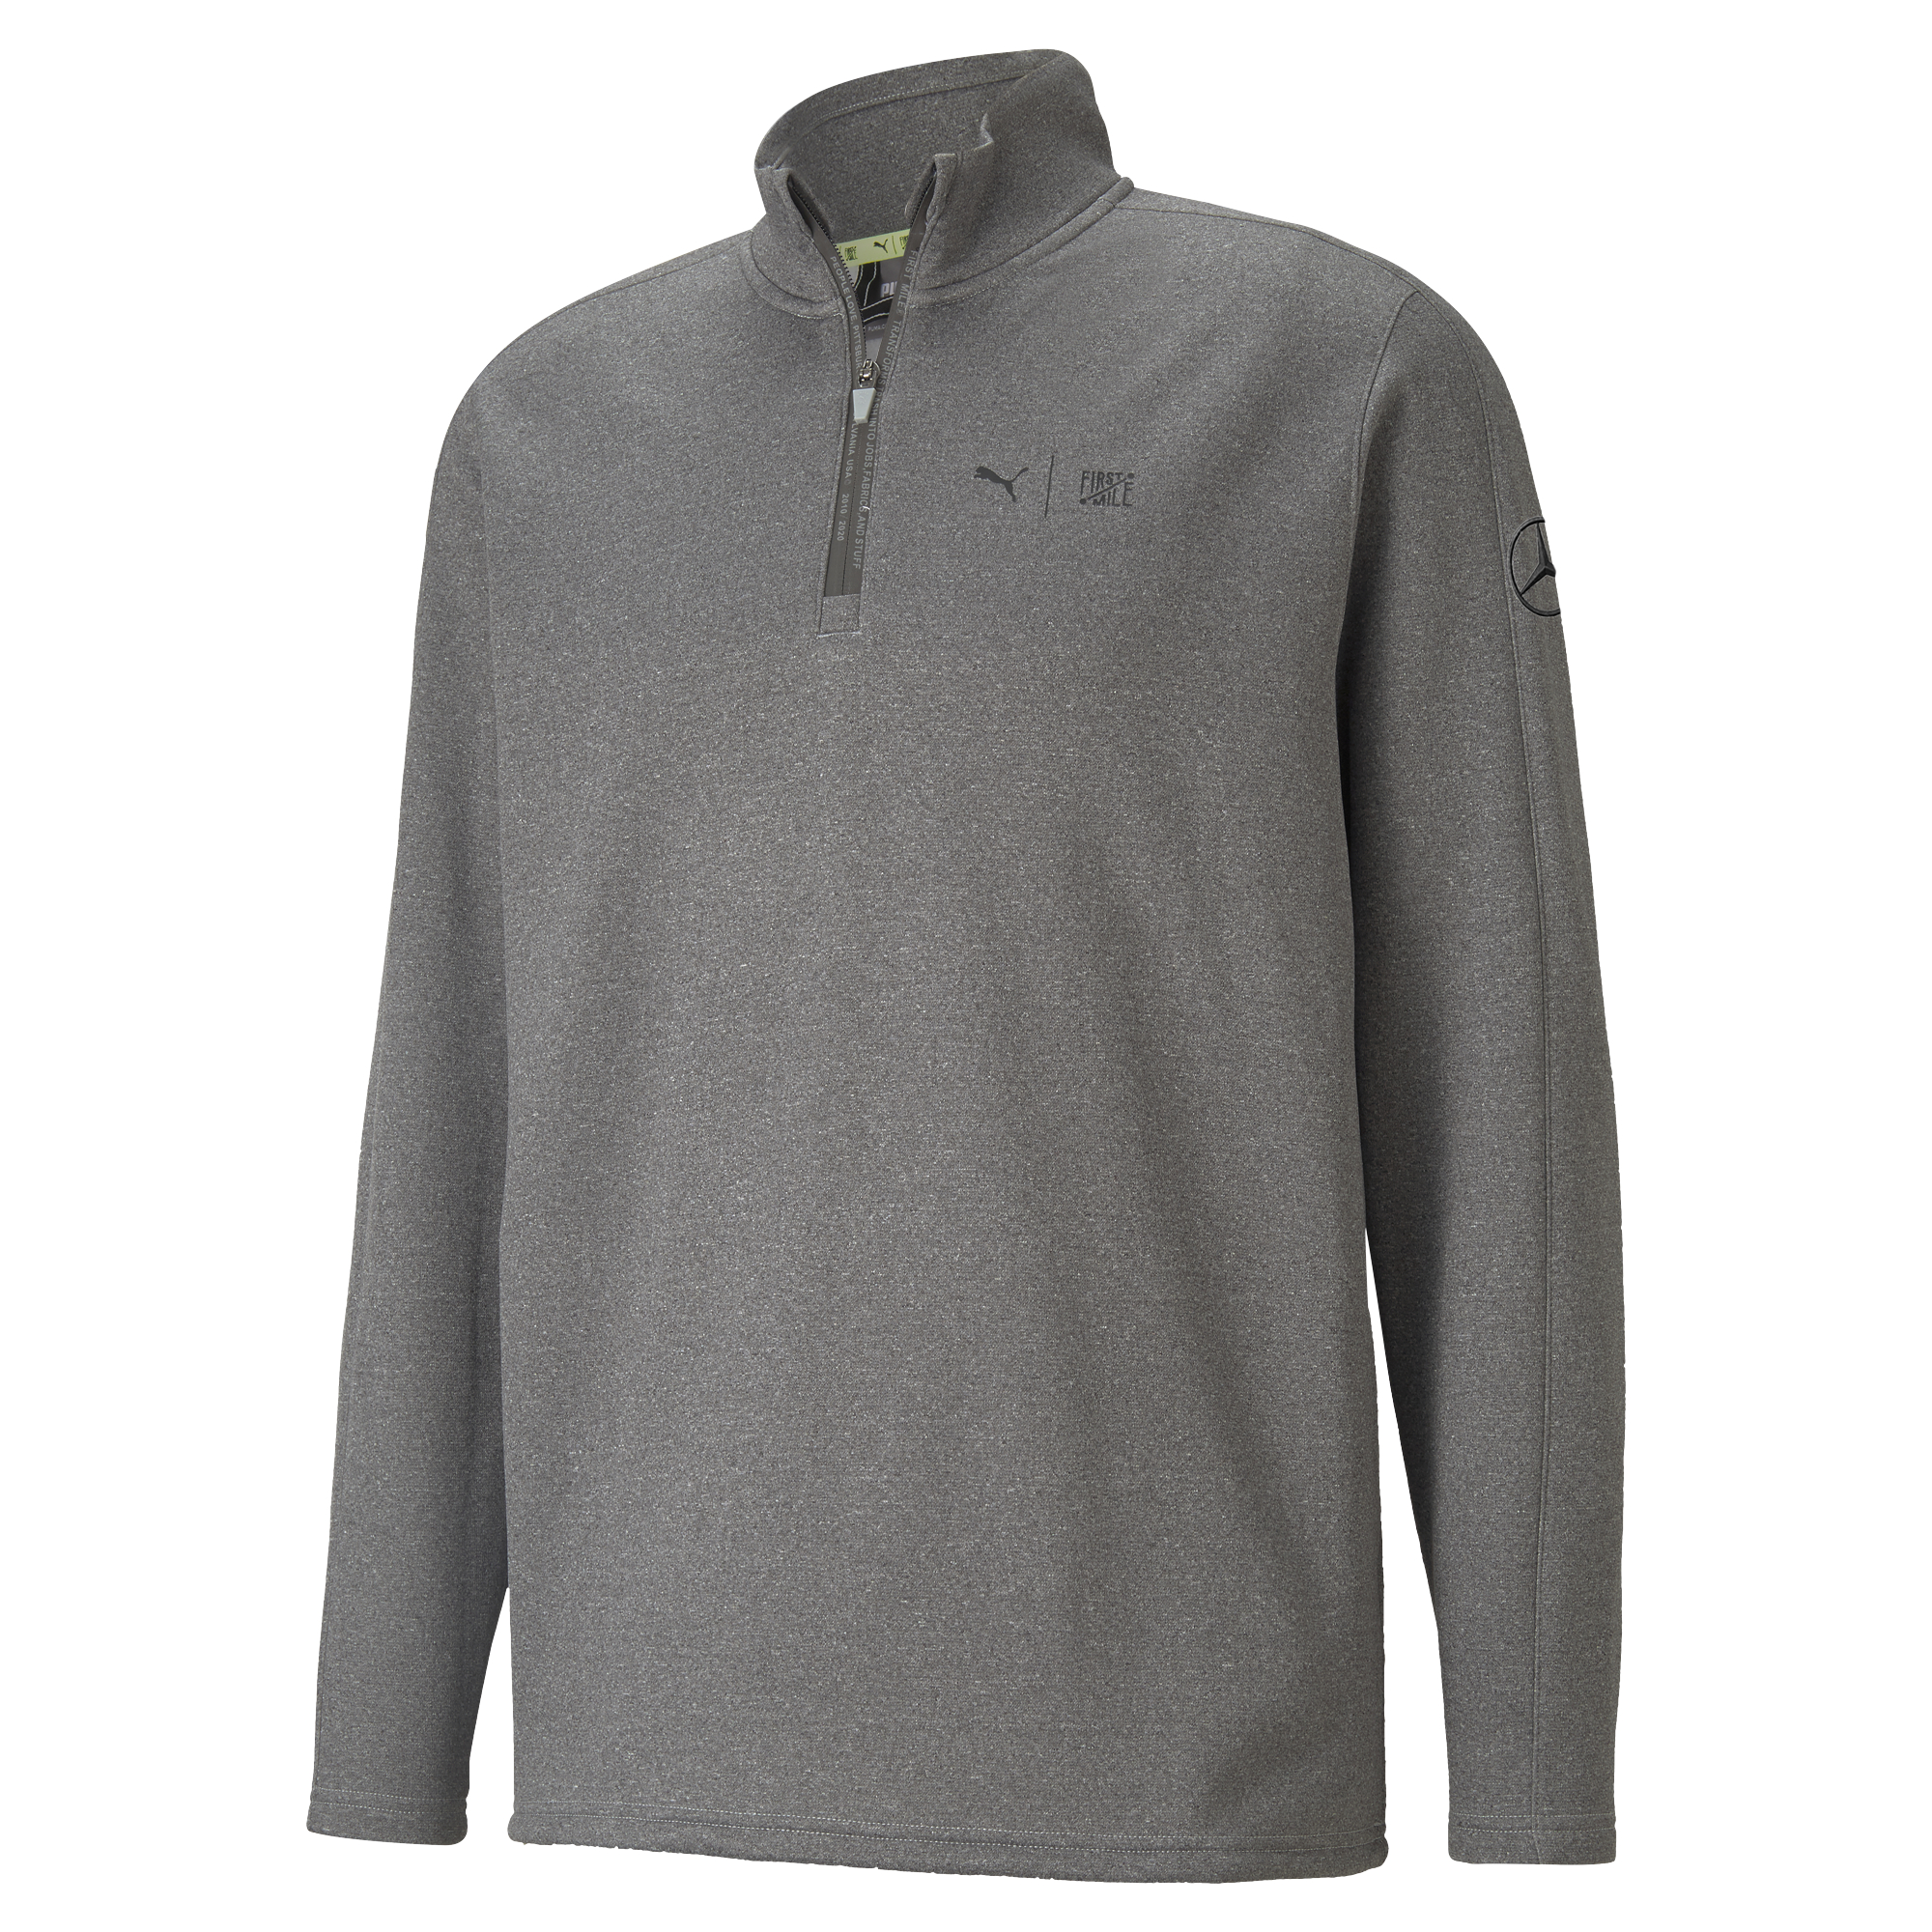 Golf-Sweater Herren - grau, XXL